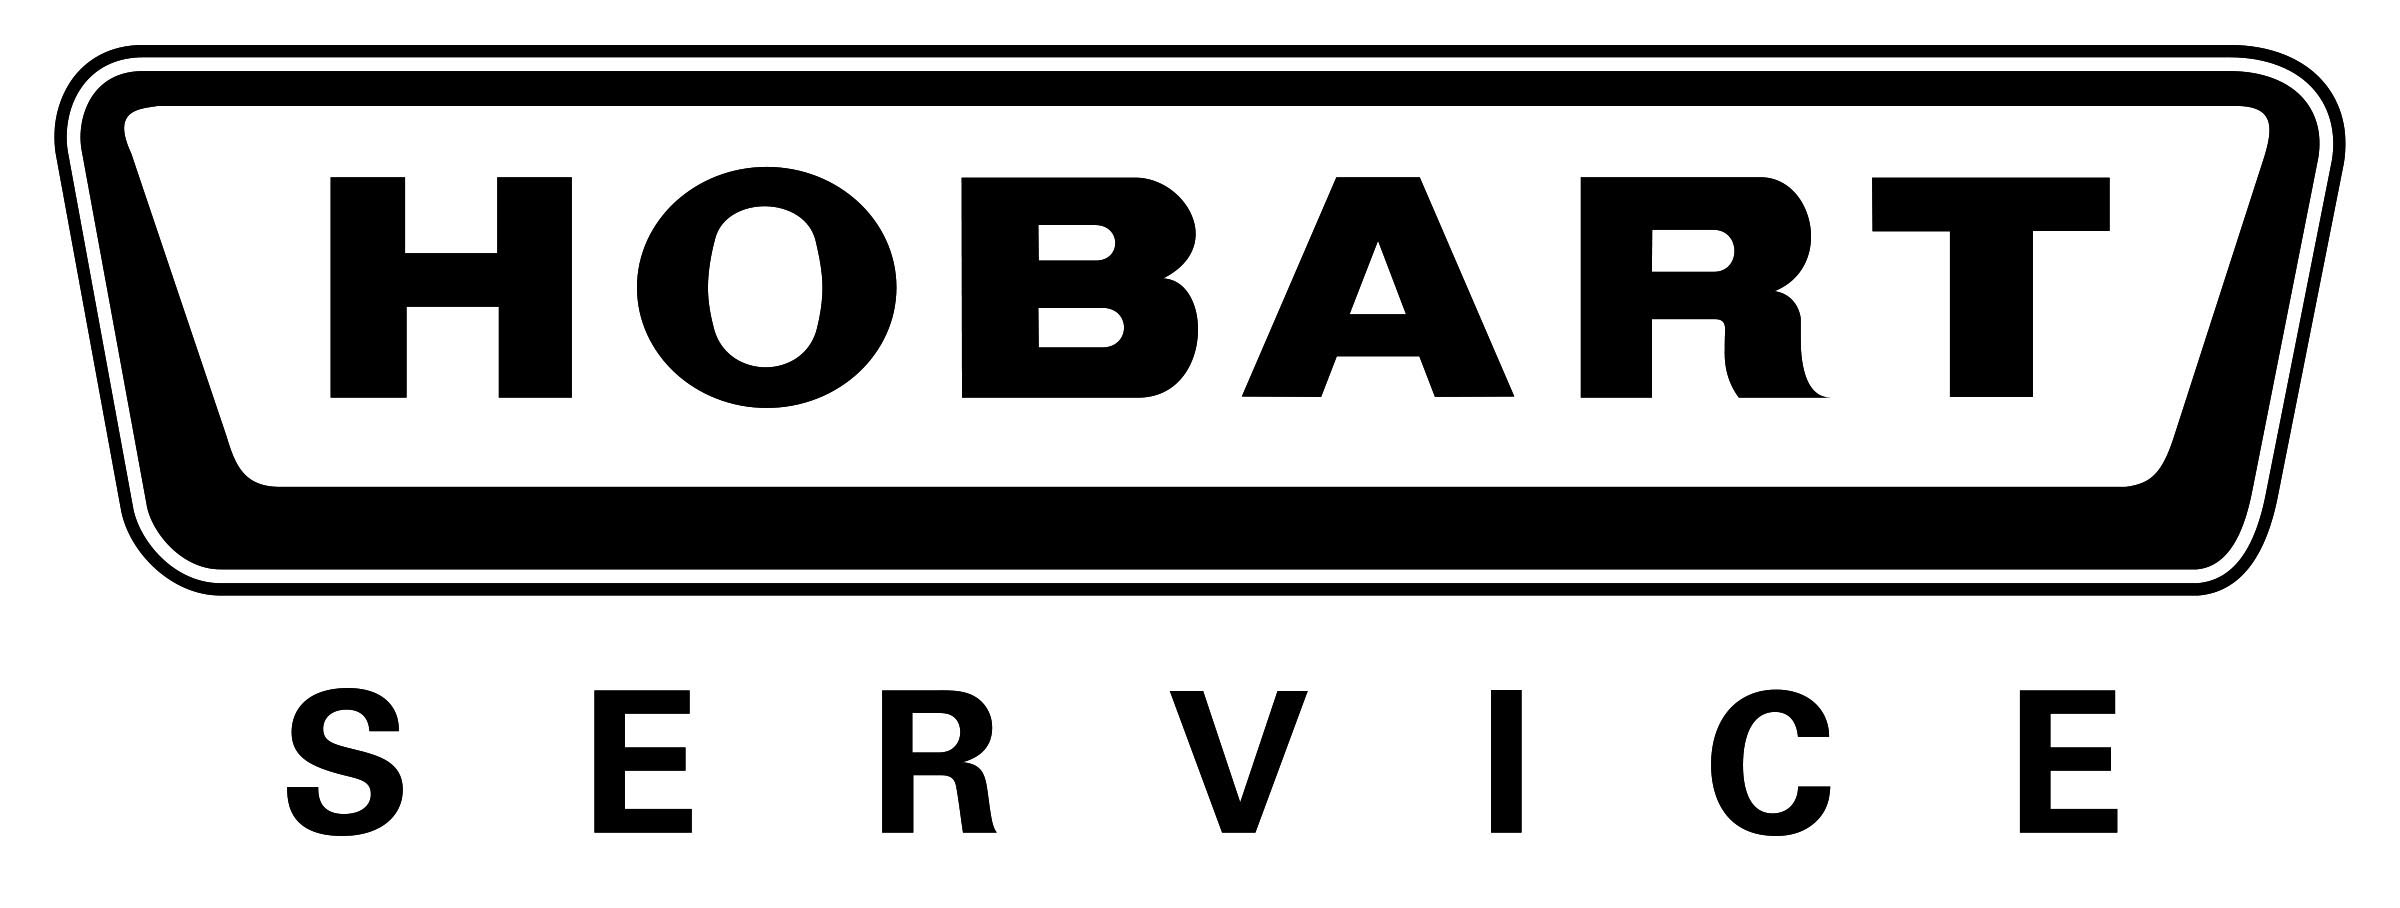 Hobart Service logo in black